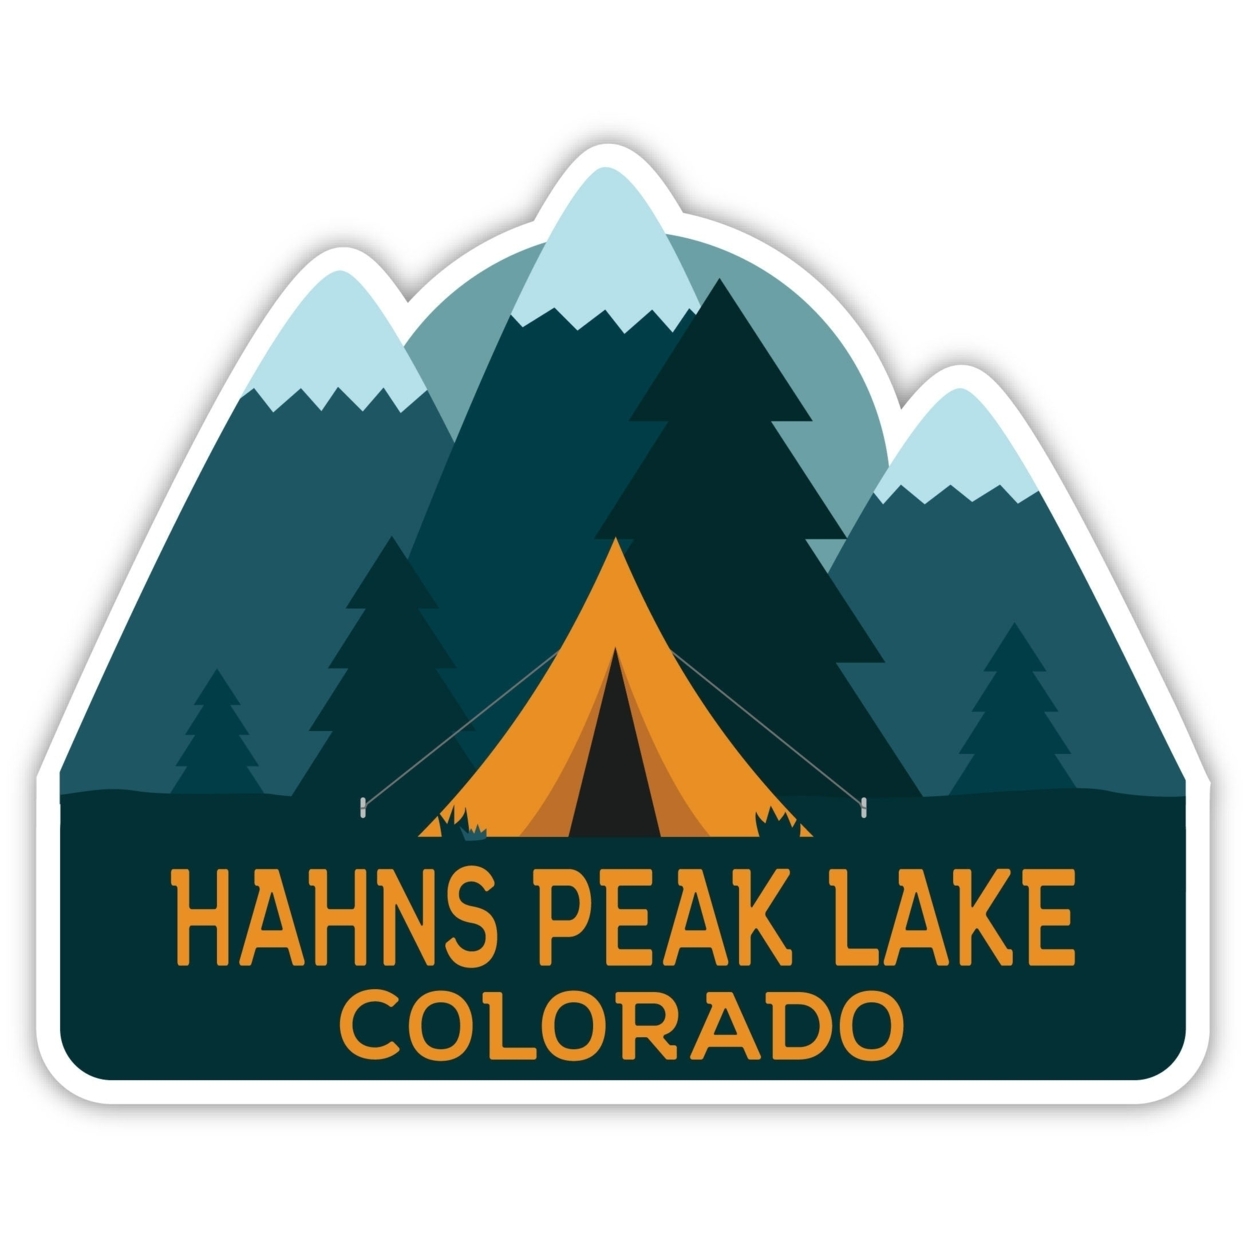 Hahns Peak Lake Colorado Souvenir Decorative Stickers (Choose Theme And Size) - 4-Pack, 2-Inch, Tent